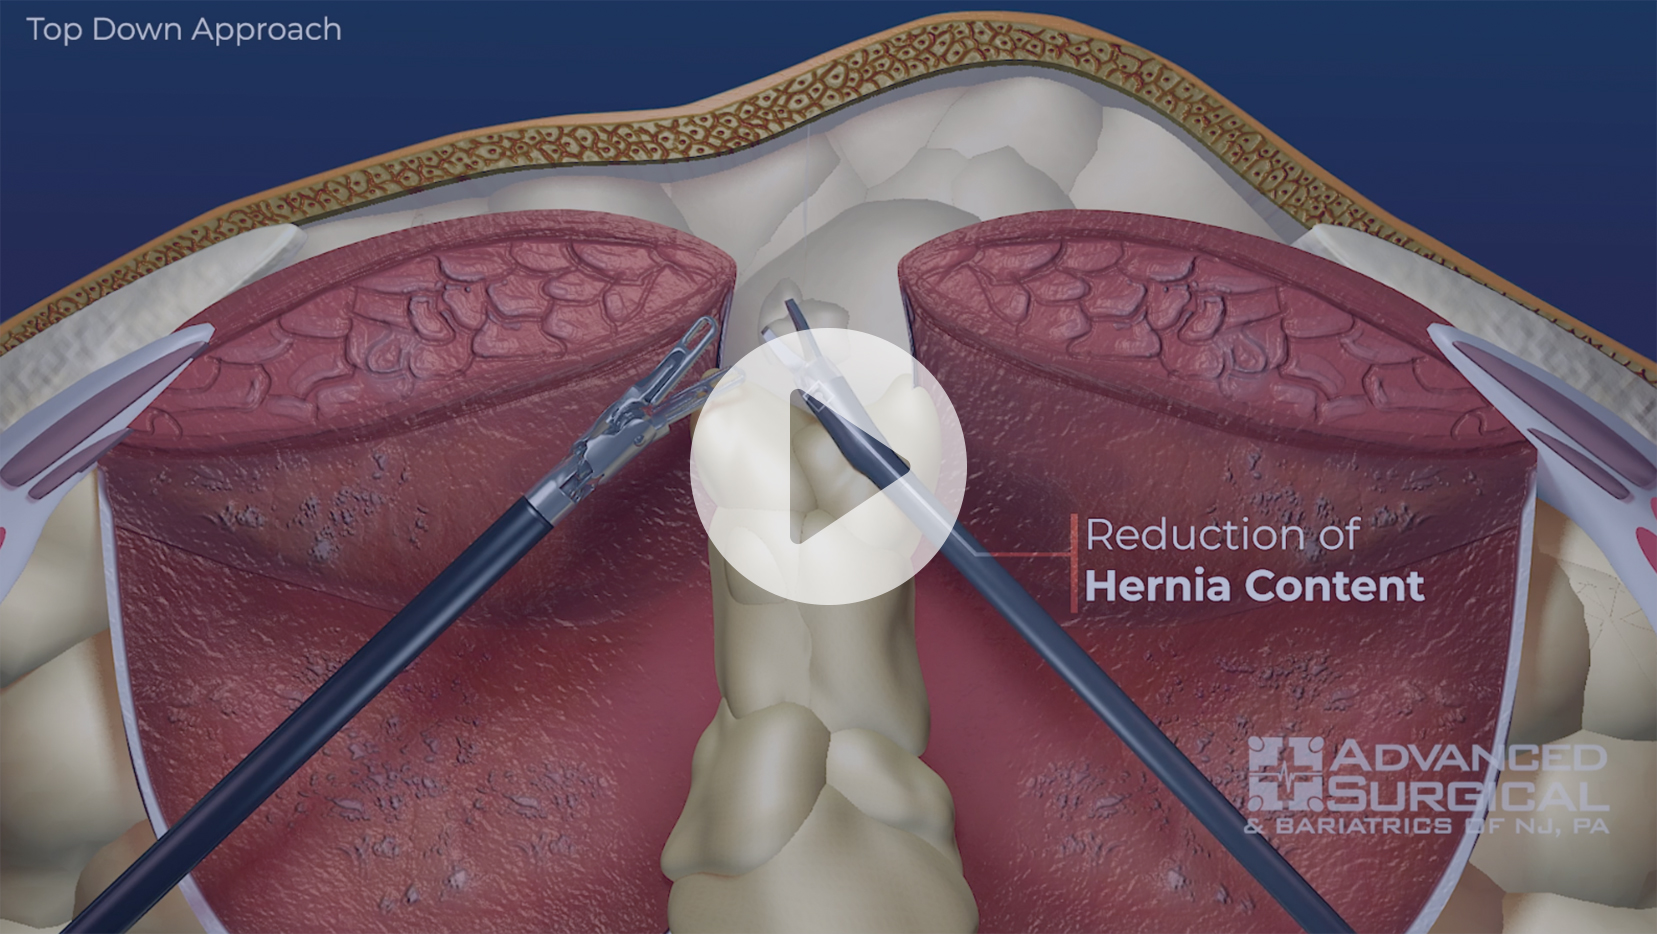 Incisional Hernia Advanced Surgical & Bariatrics of NJ